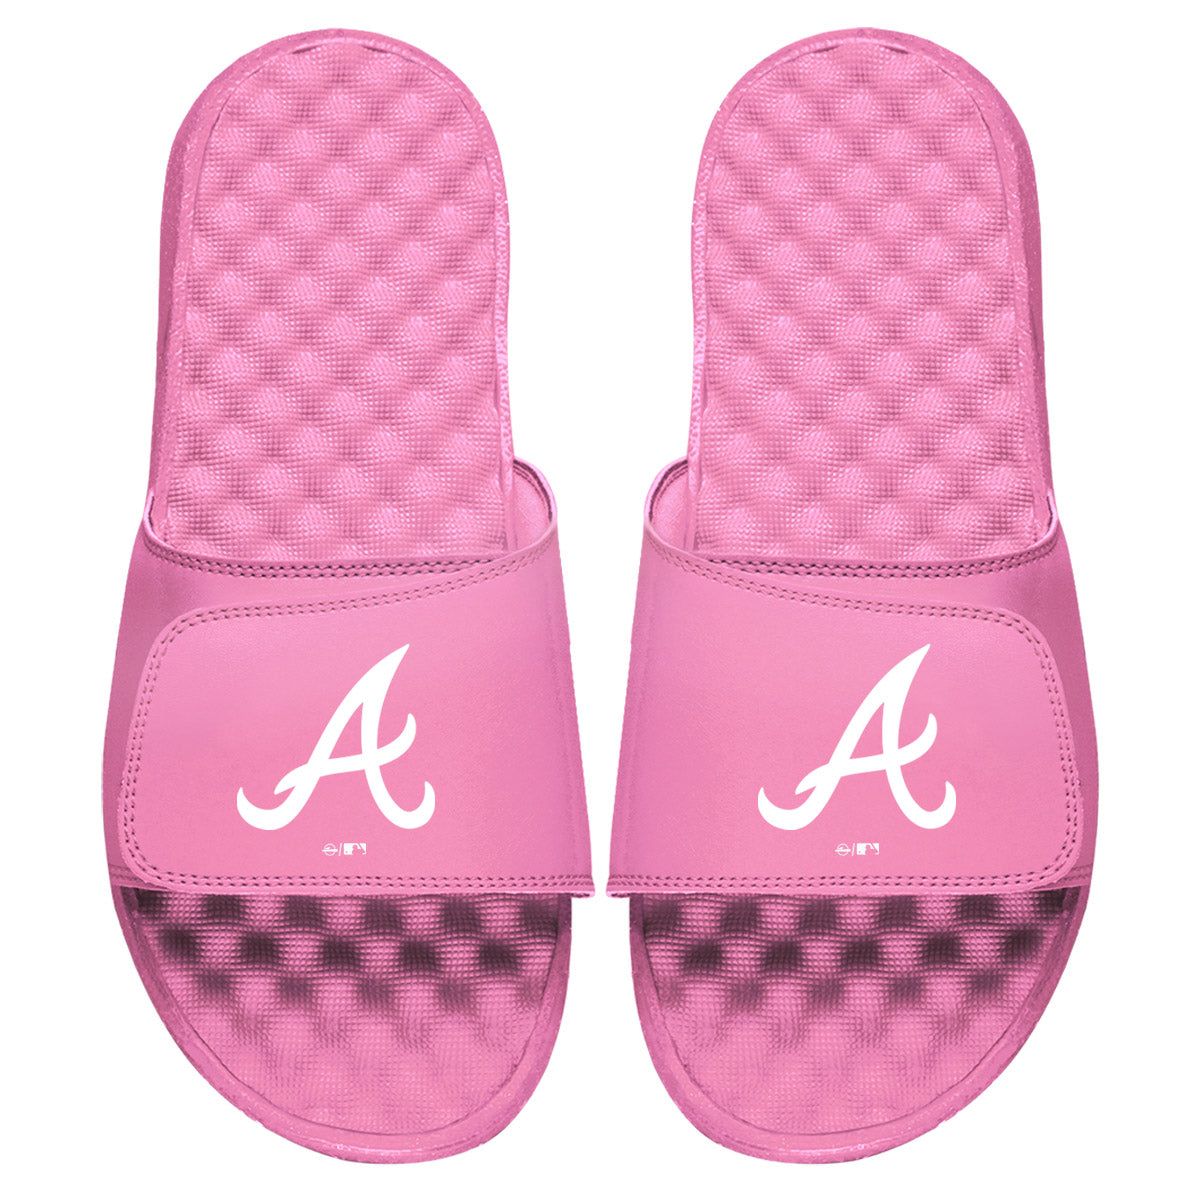 ISlides Official - Atlanta Braves Primary Pink 8 / Pink Slides - Sandals - Slippers